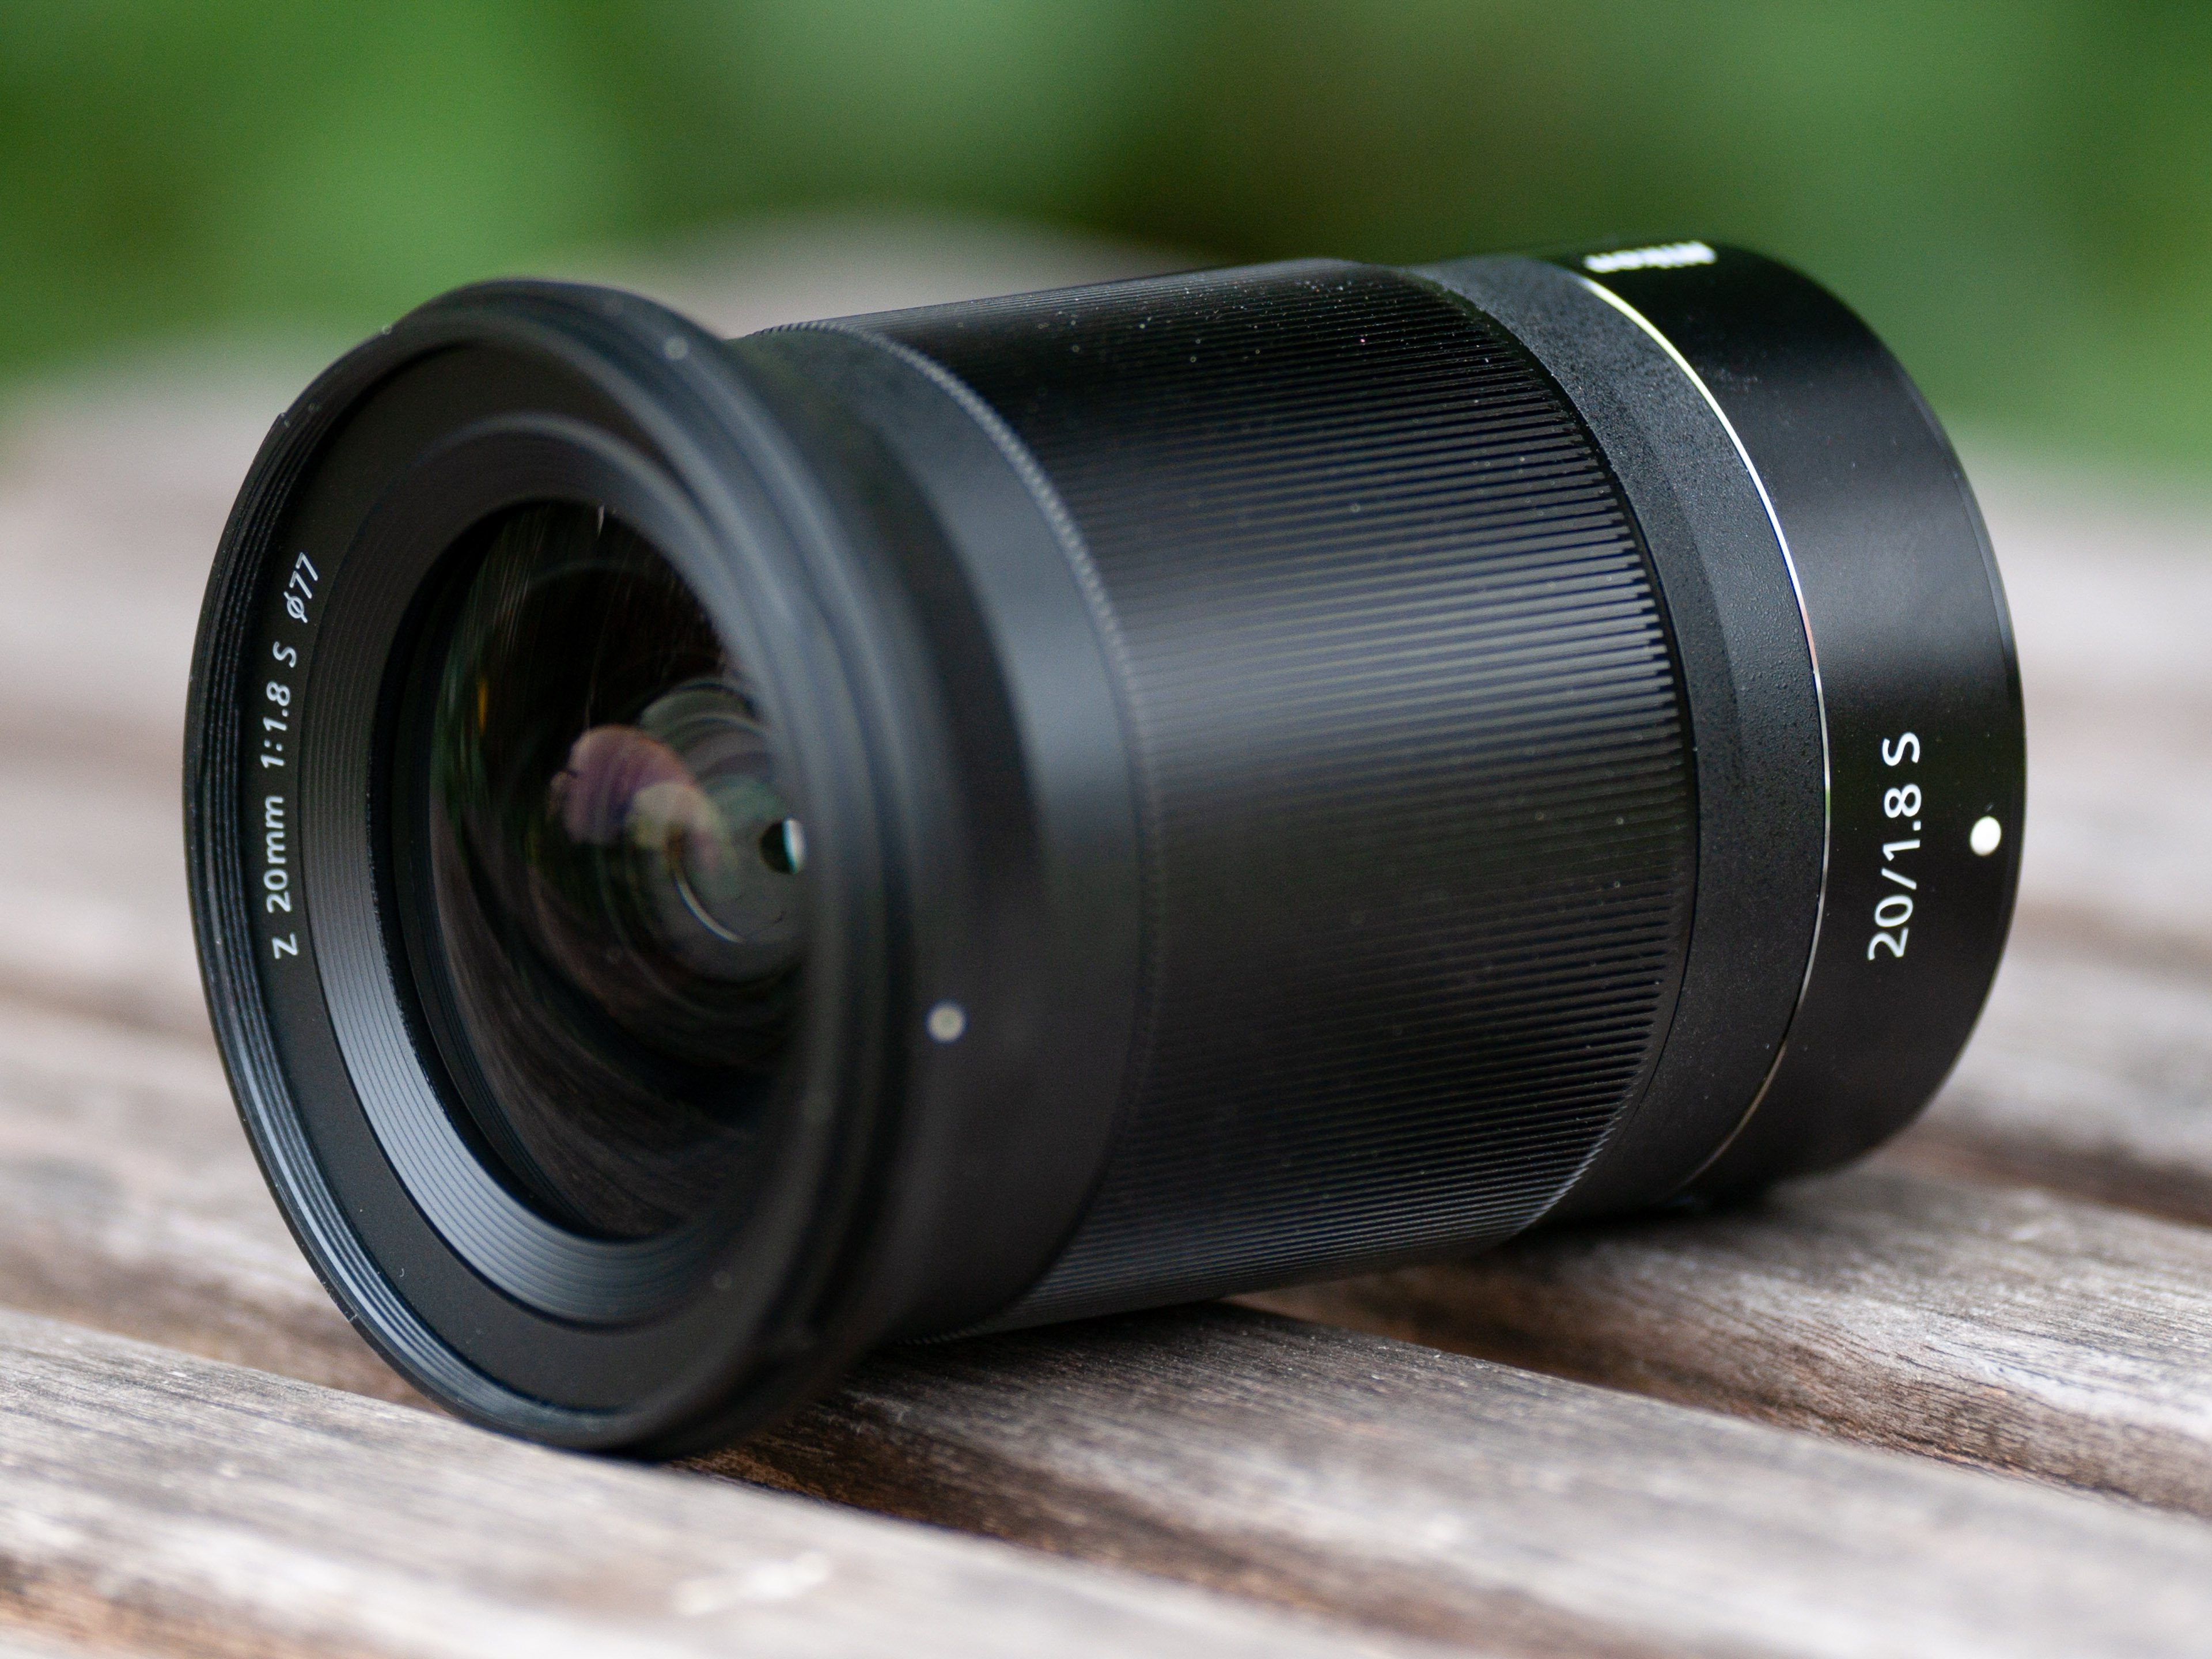 Nikon Z 20mm f1.8 S review | Cameralabs